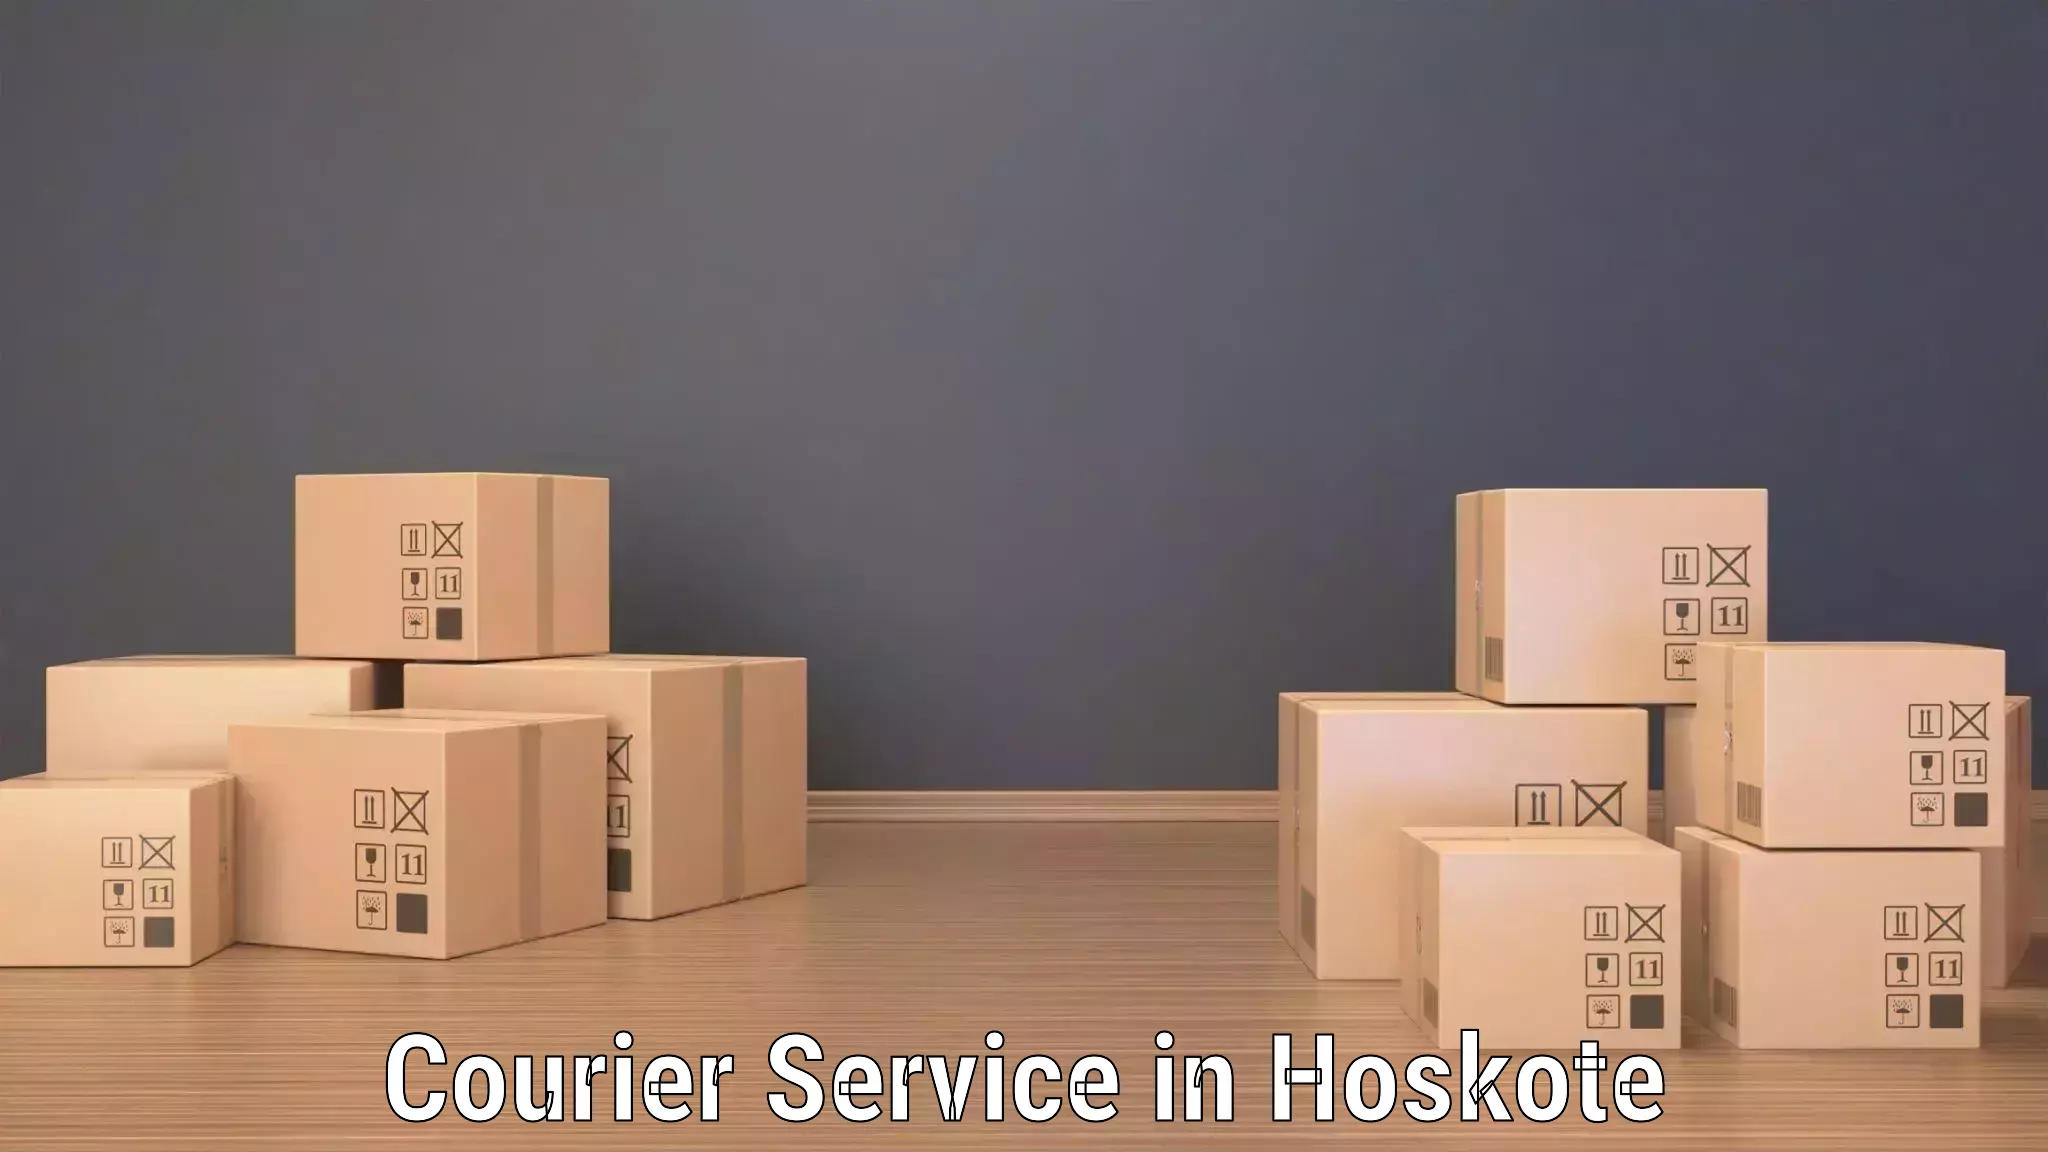 Quick parcel dispatch in Hoskote